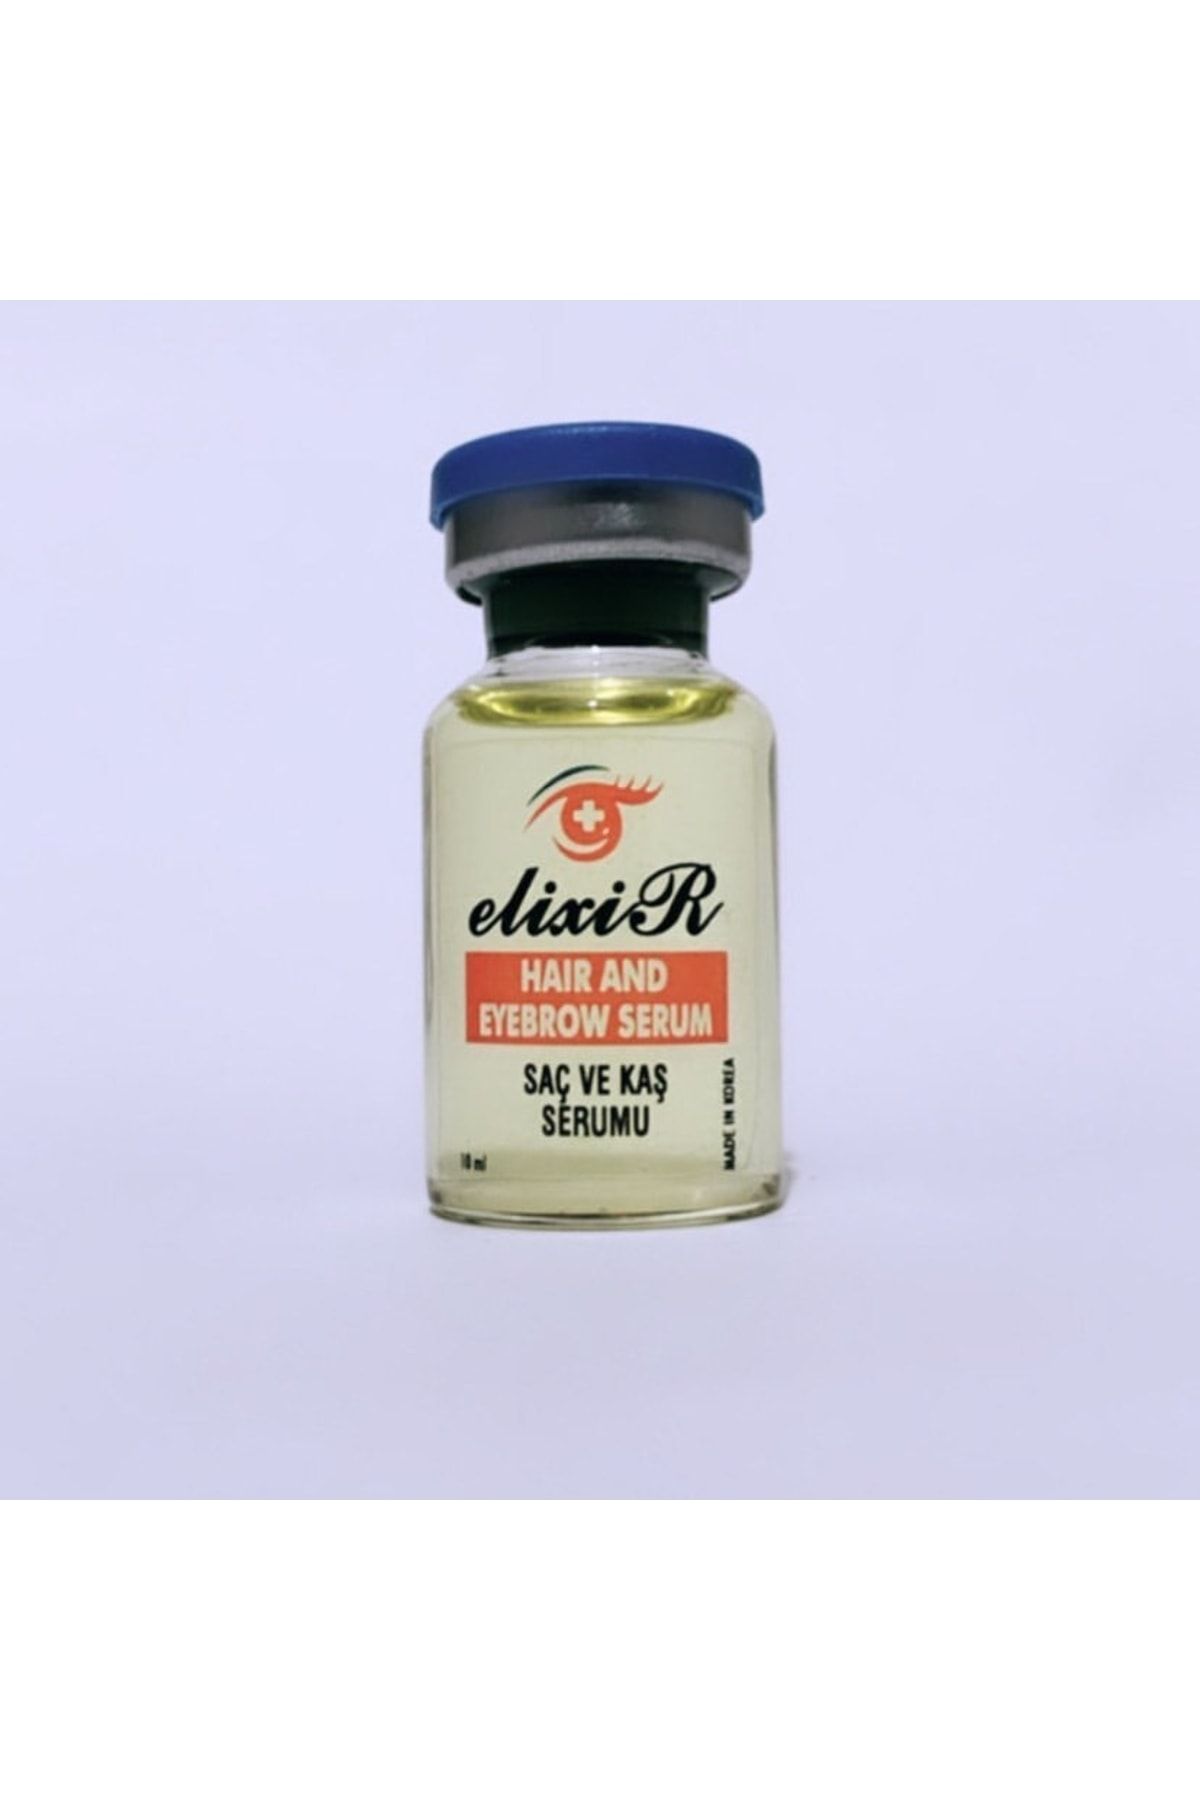 Elixir " Saç Ve Kaş Serumu" Haır And Eyebrow Serum